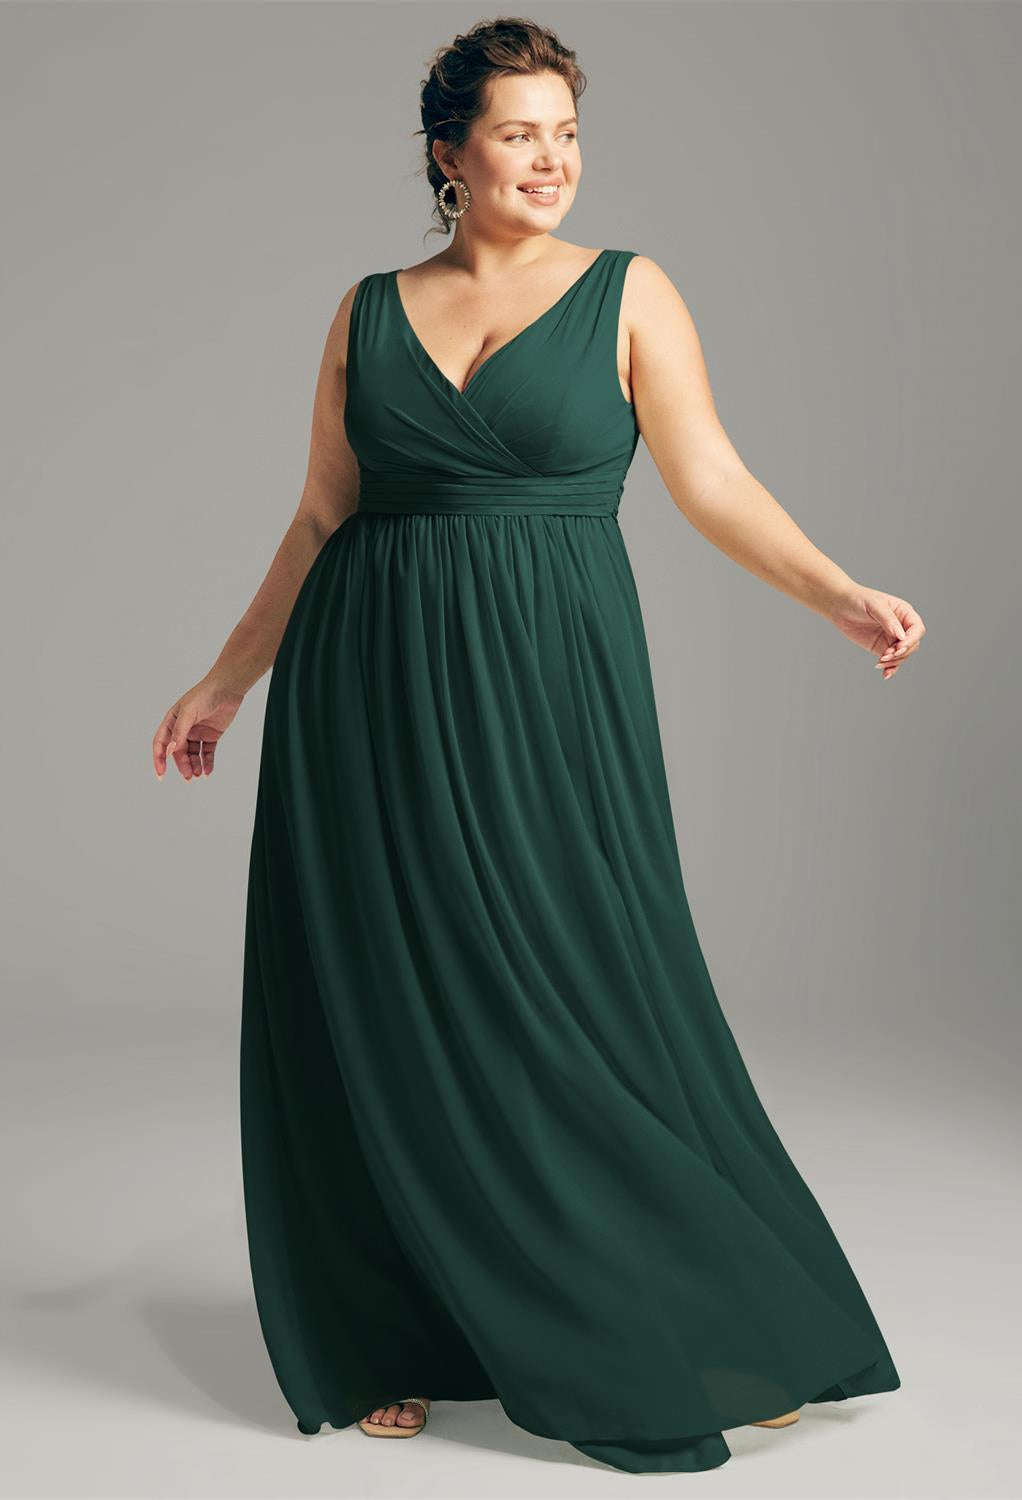 Hilaria - Chiffon Bridesmaid Dress - Off the Rack in emerald green available at Bergamot Bridal.